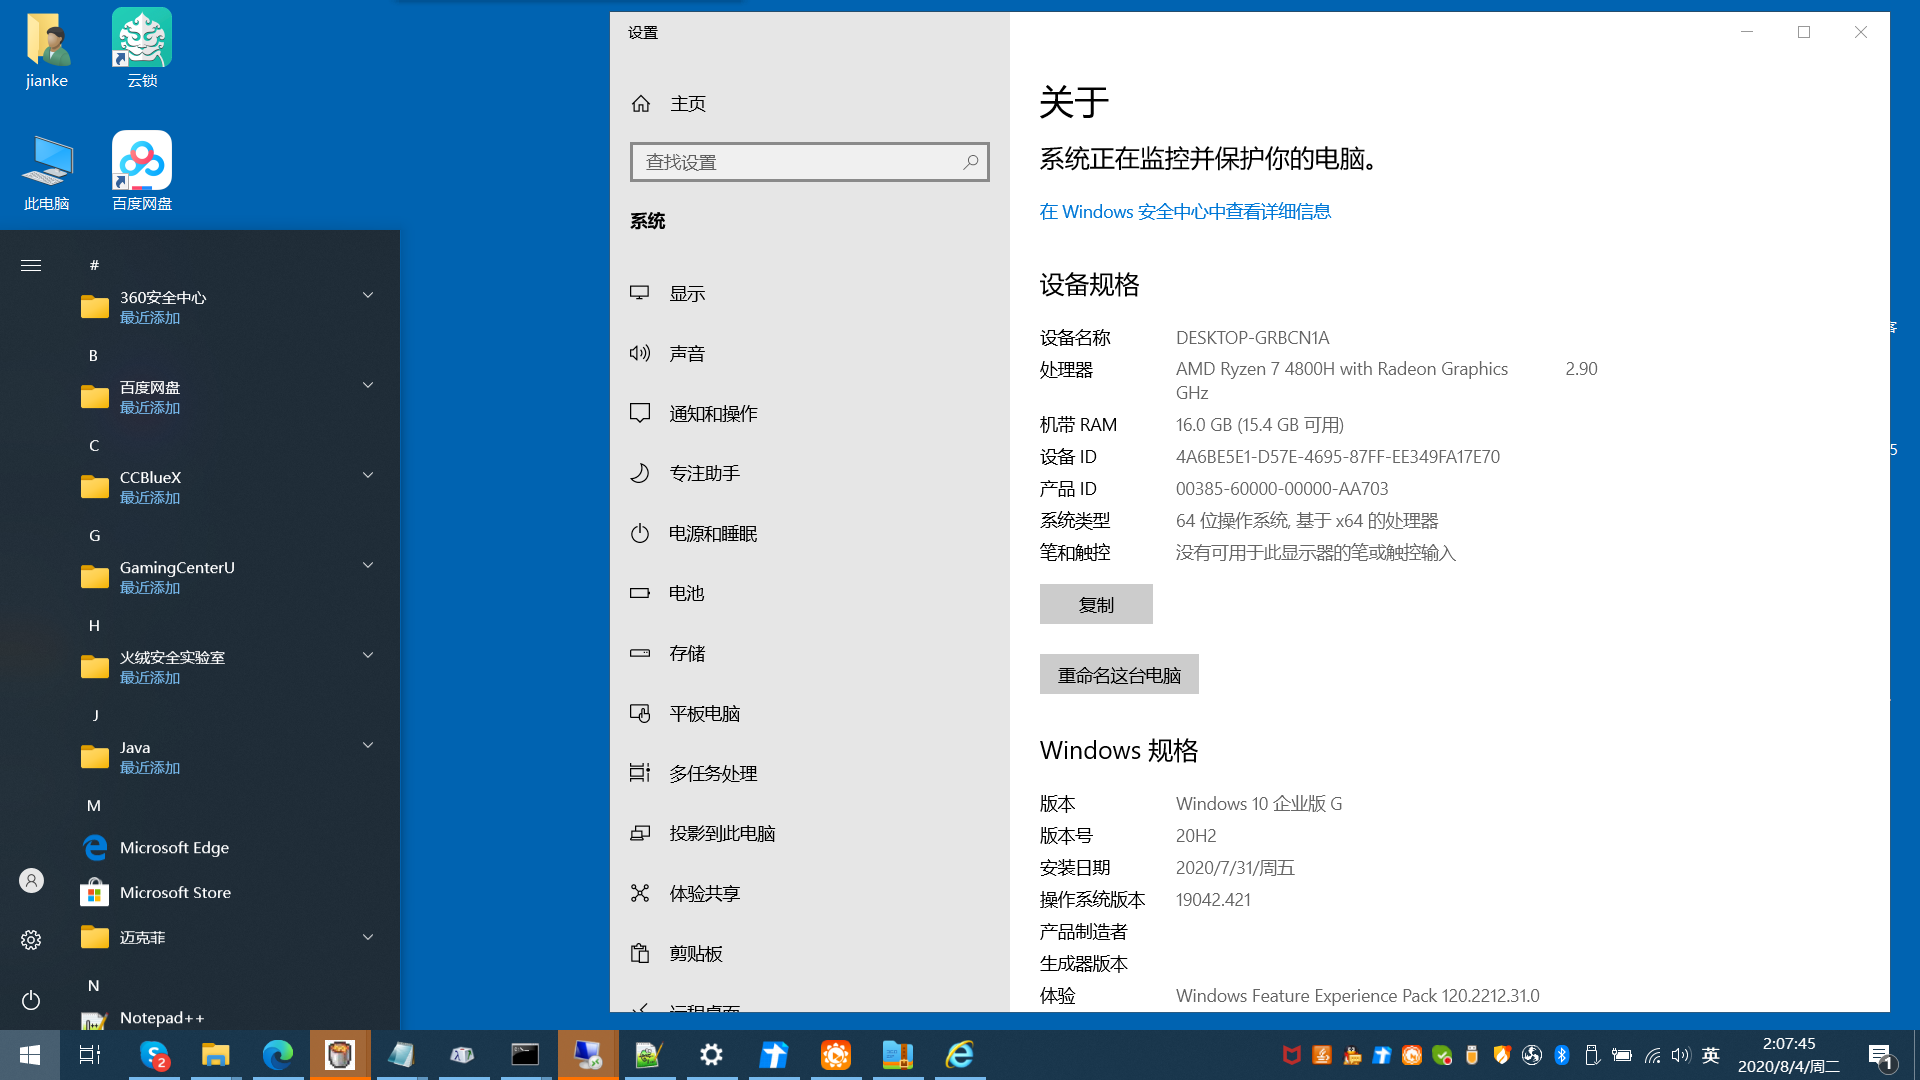 Windows 10(20H2 19042.421)YLX精简优化版-PK技术网